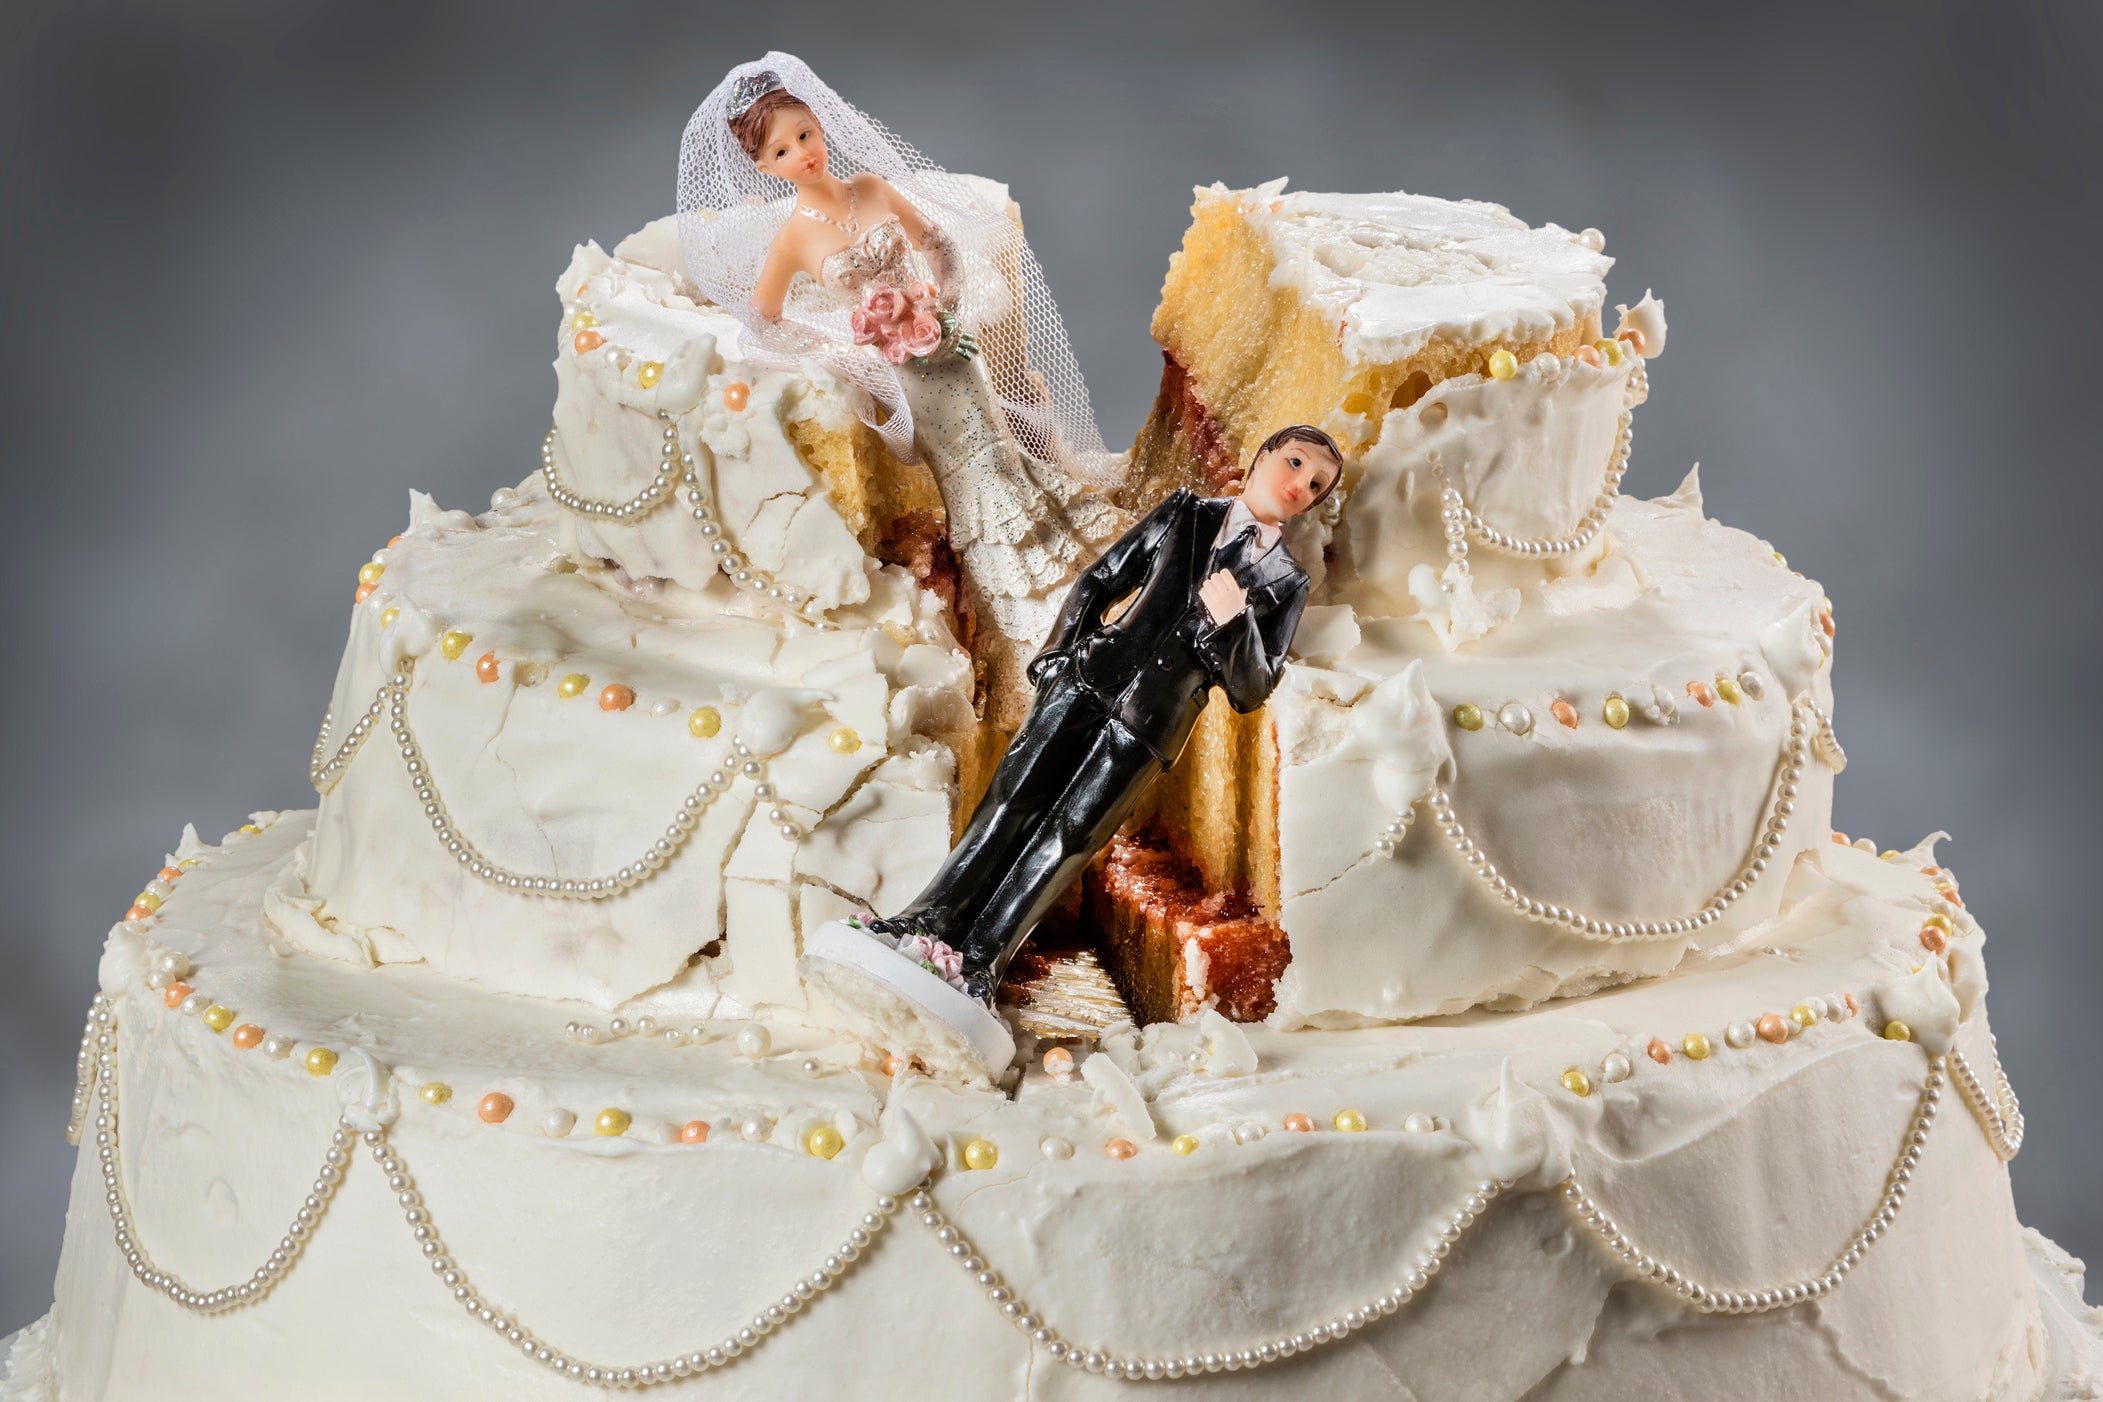 Bridge and groom figurines sink into a cut-up wedding cake.